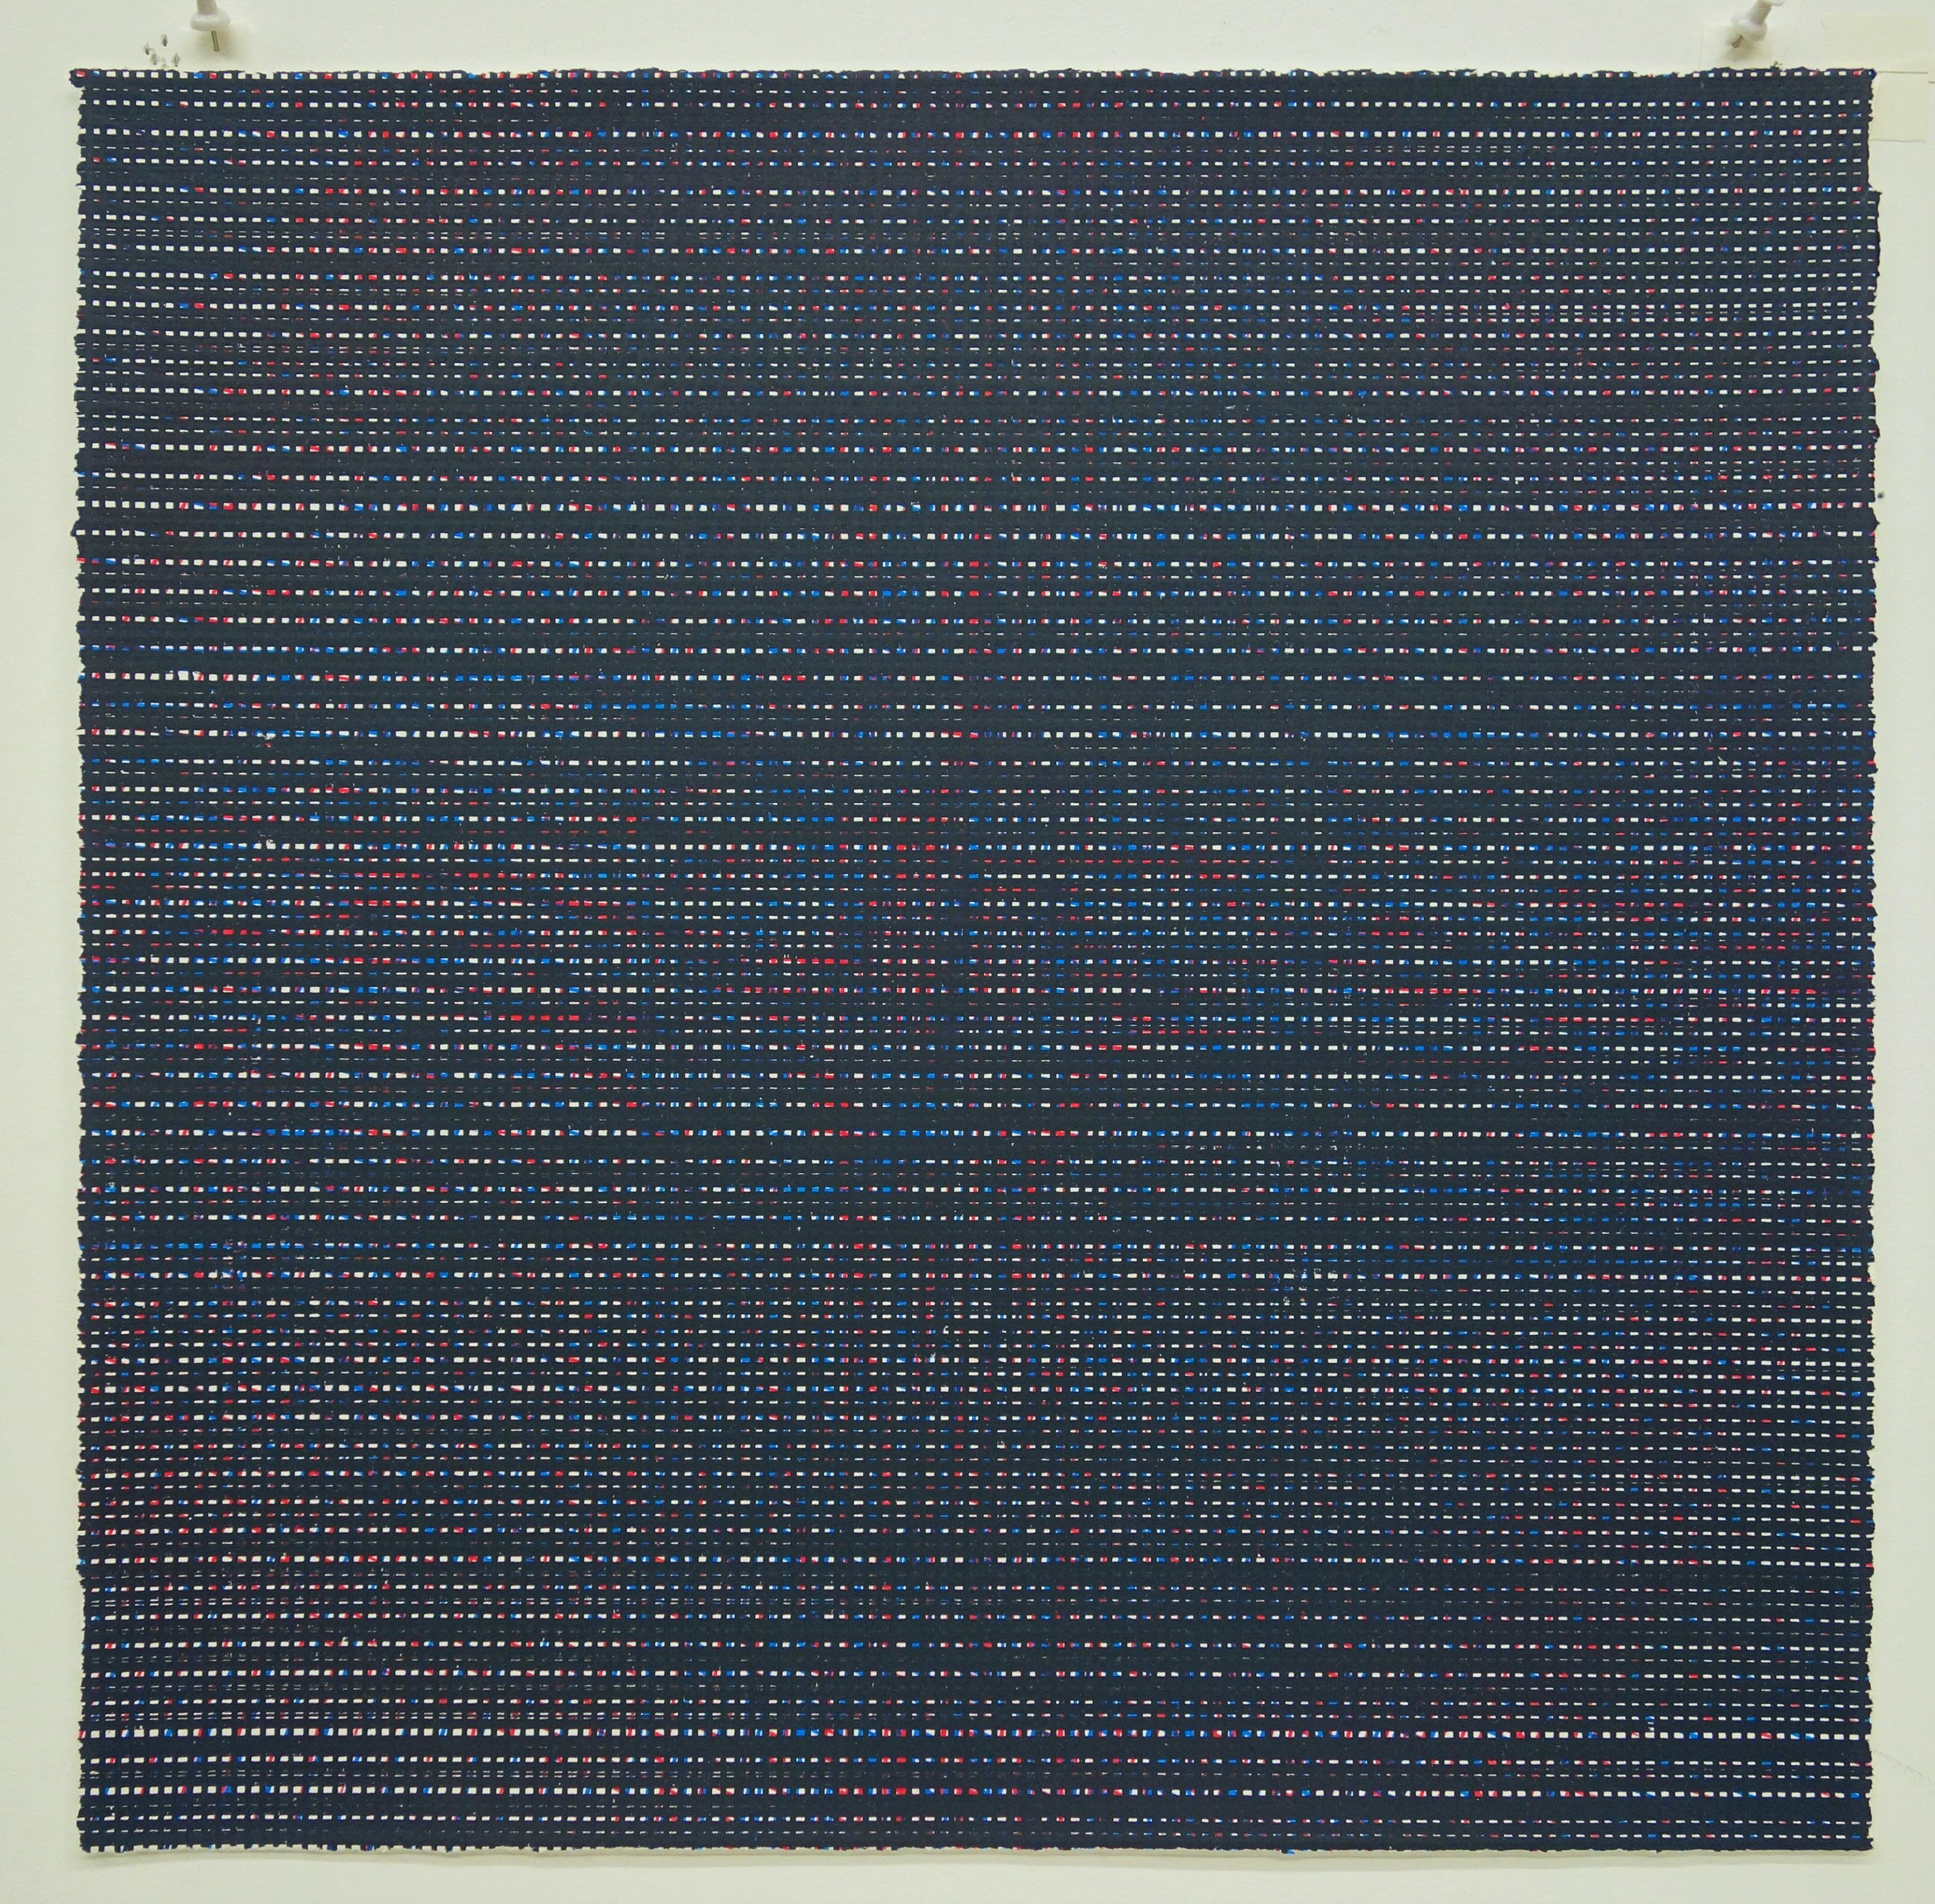 Rob de Oude, Untitled-Wassaic 2, 2016, silkscreen, 18 x 18 inches, Suite of 10 6